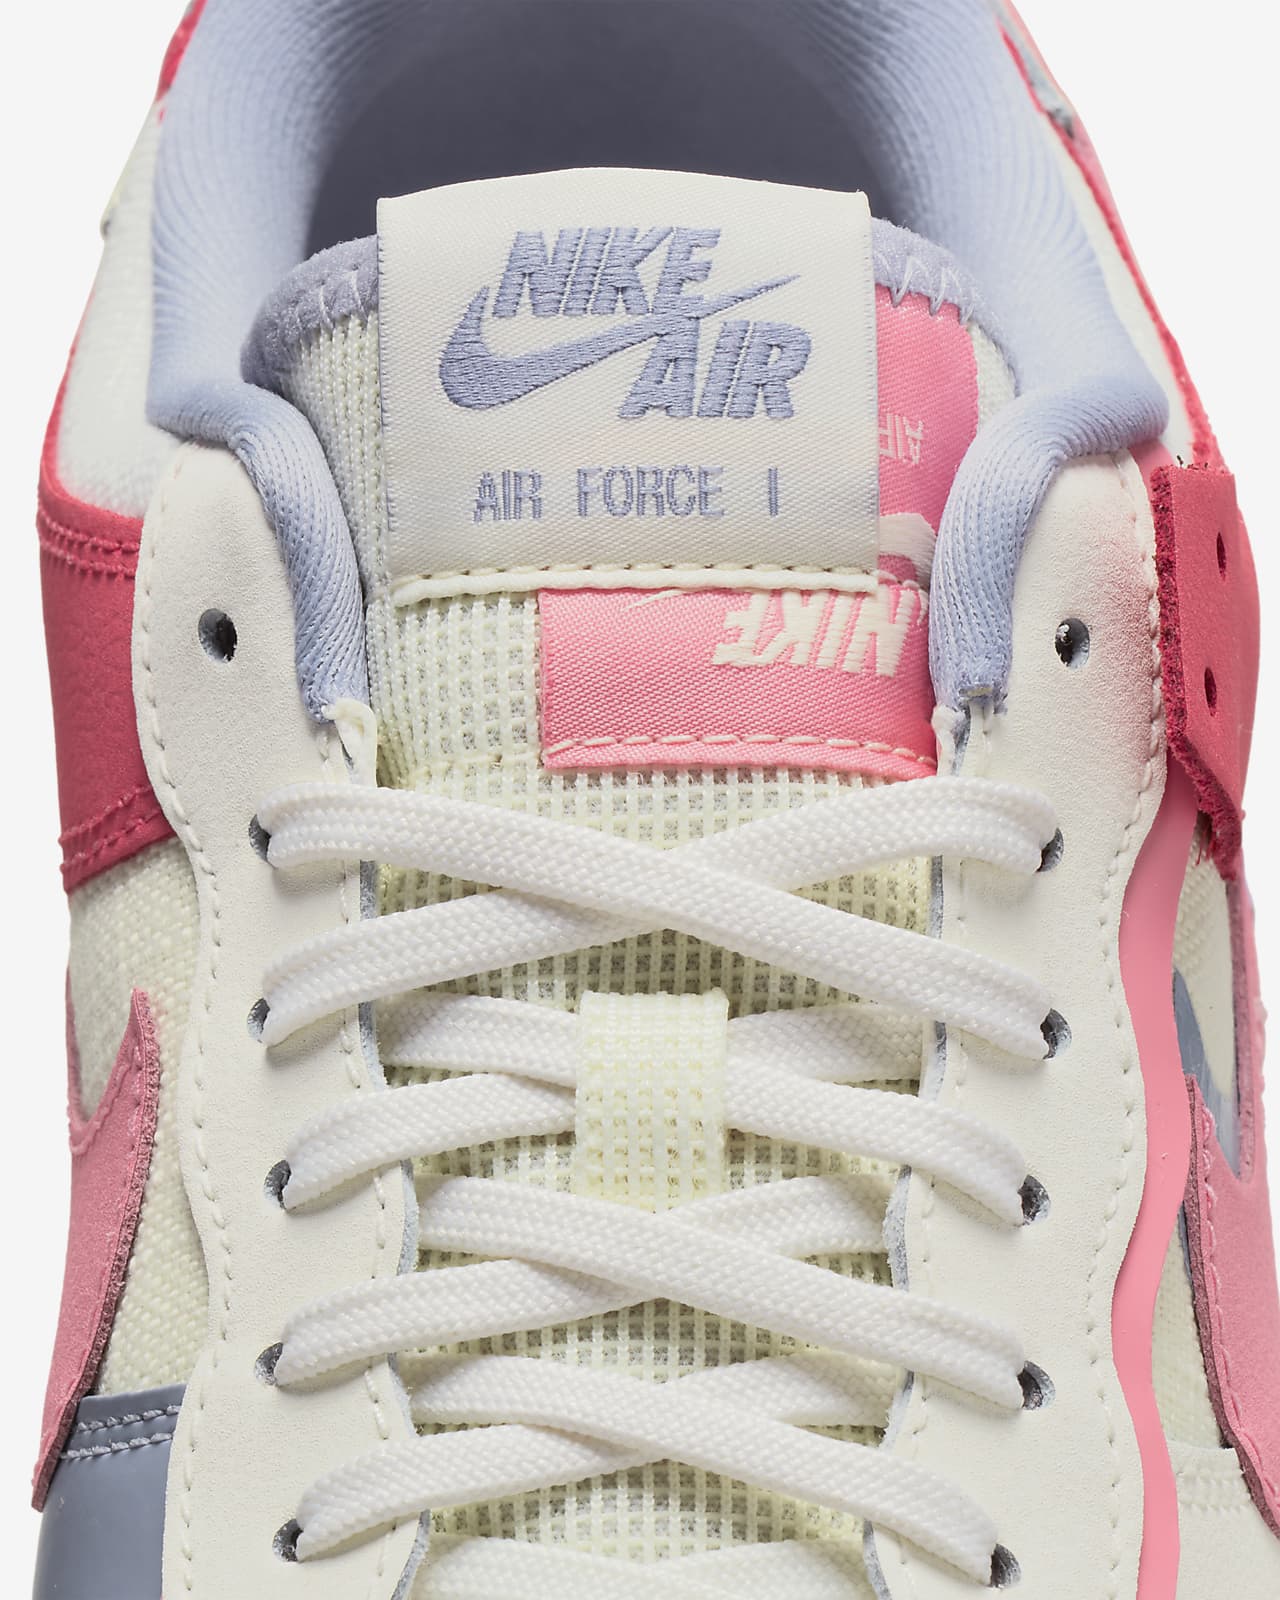 Air Force 1. Nike IN